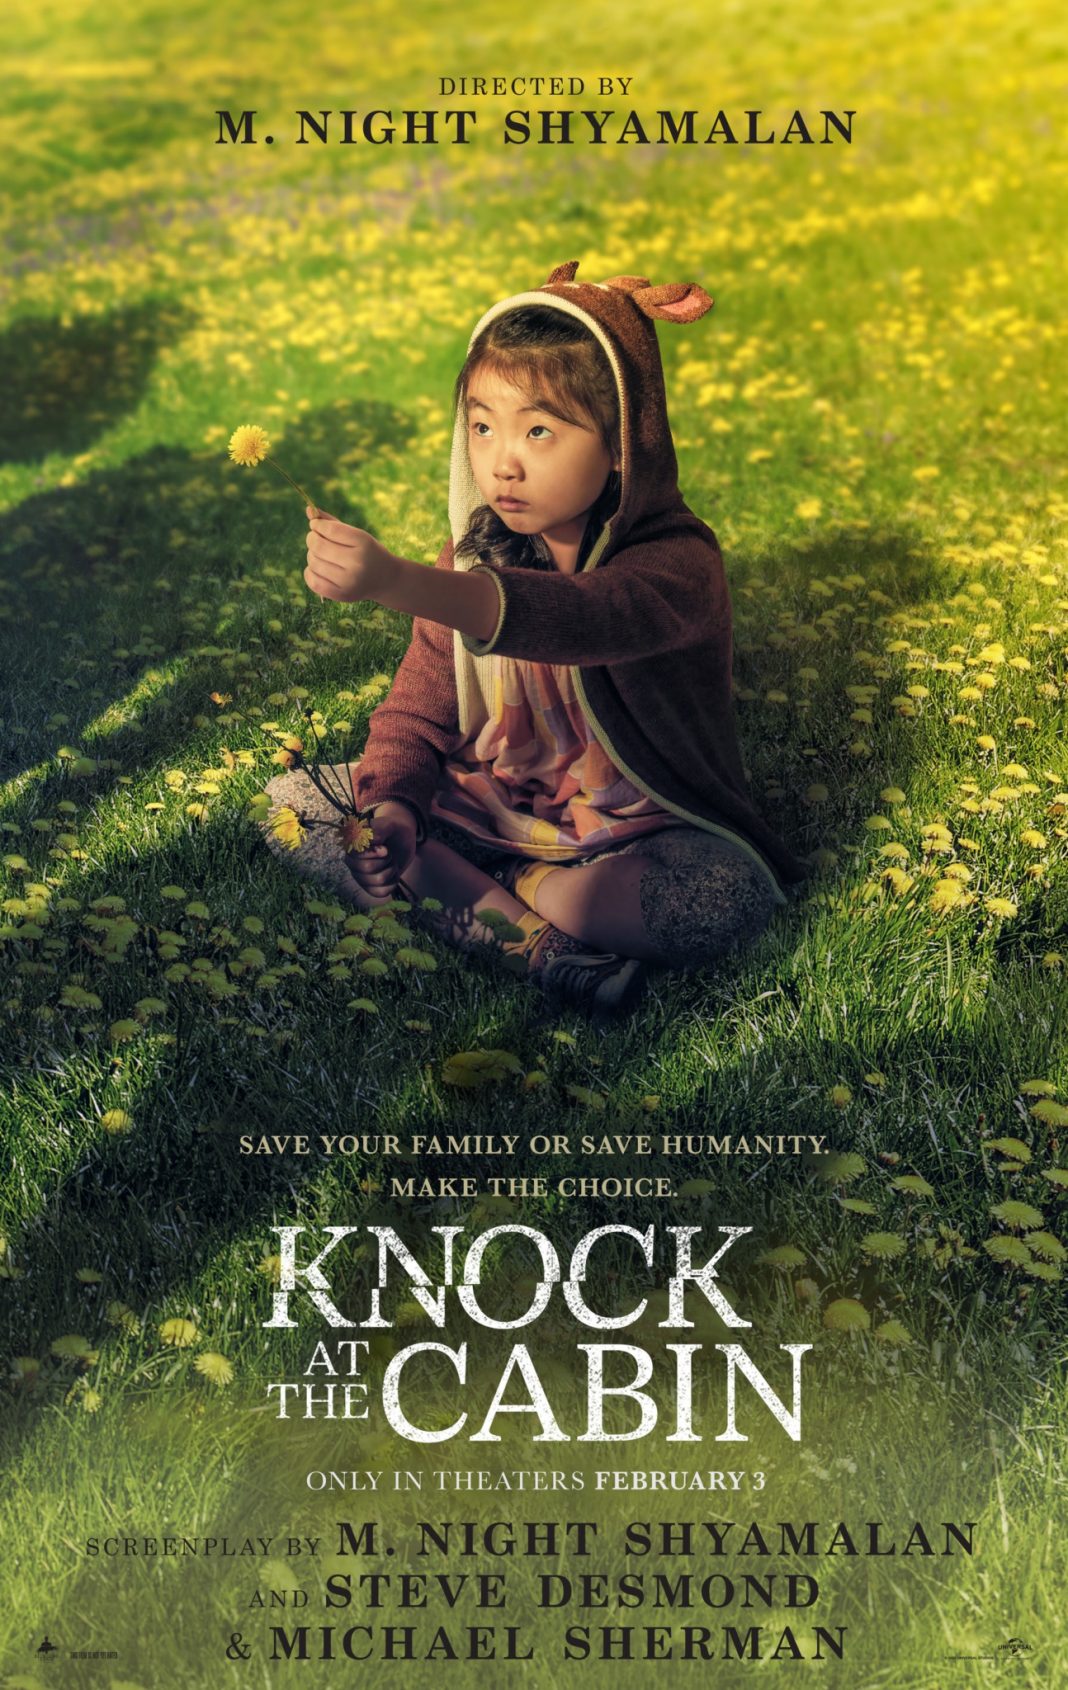 "Knock at the Cabin": Mysteriöser Trailer zu M. Night Shyamalans neuem Film